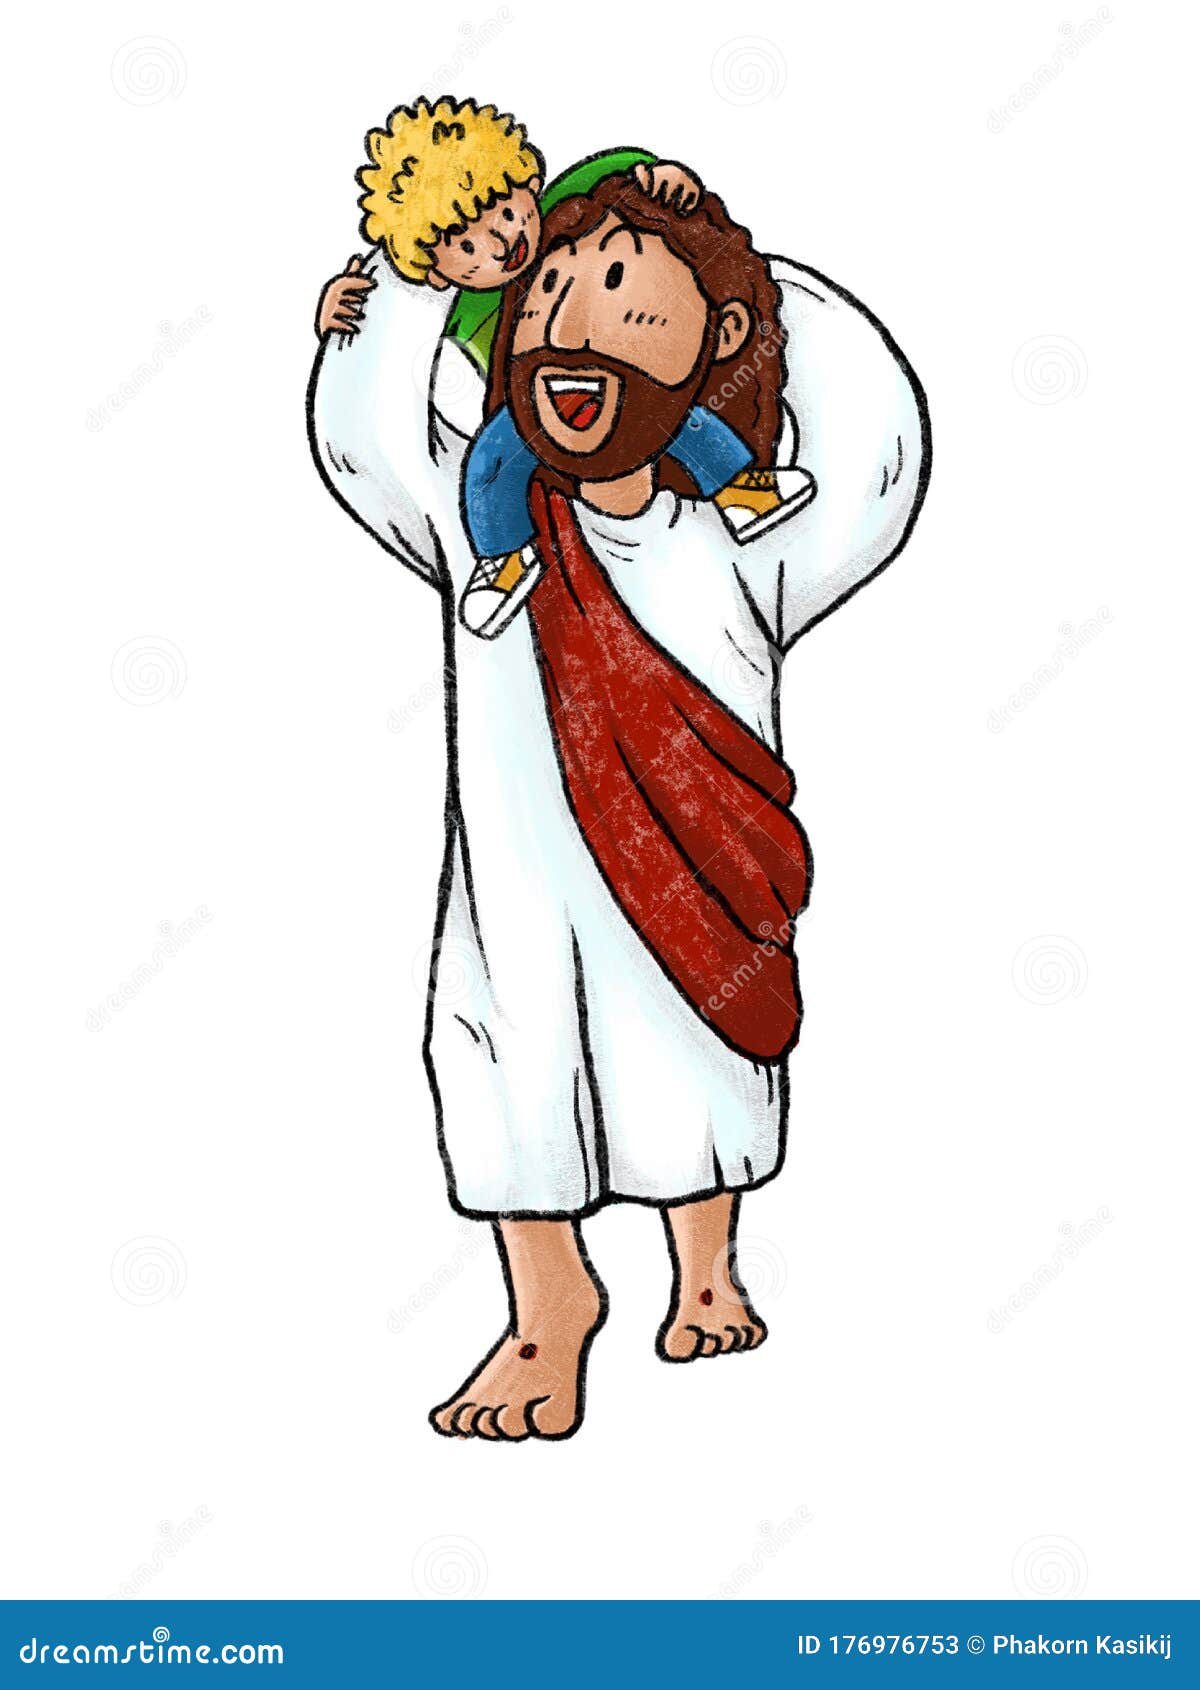 441 Jesus Cartoon Stock Photos - Free & Royalty-Free Stock Photos from  Dreamstime